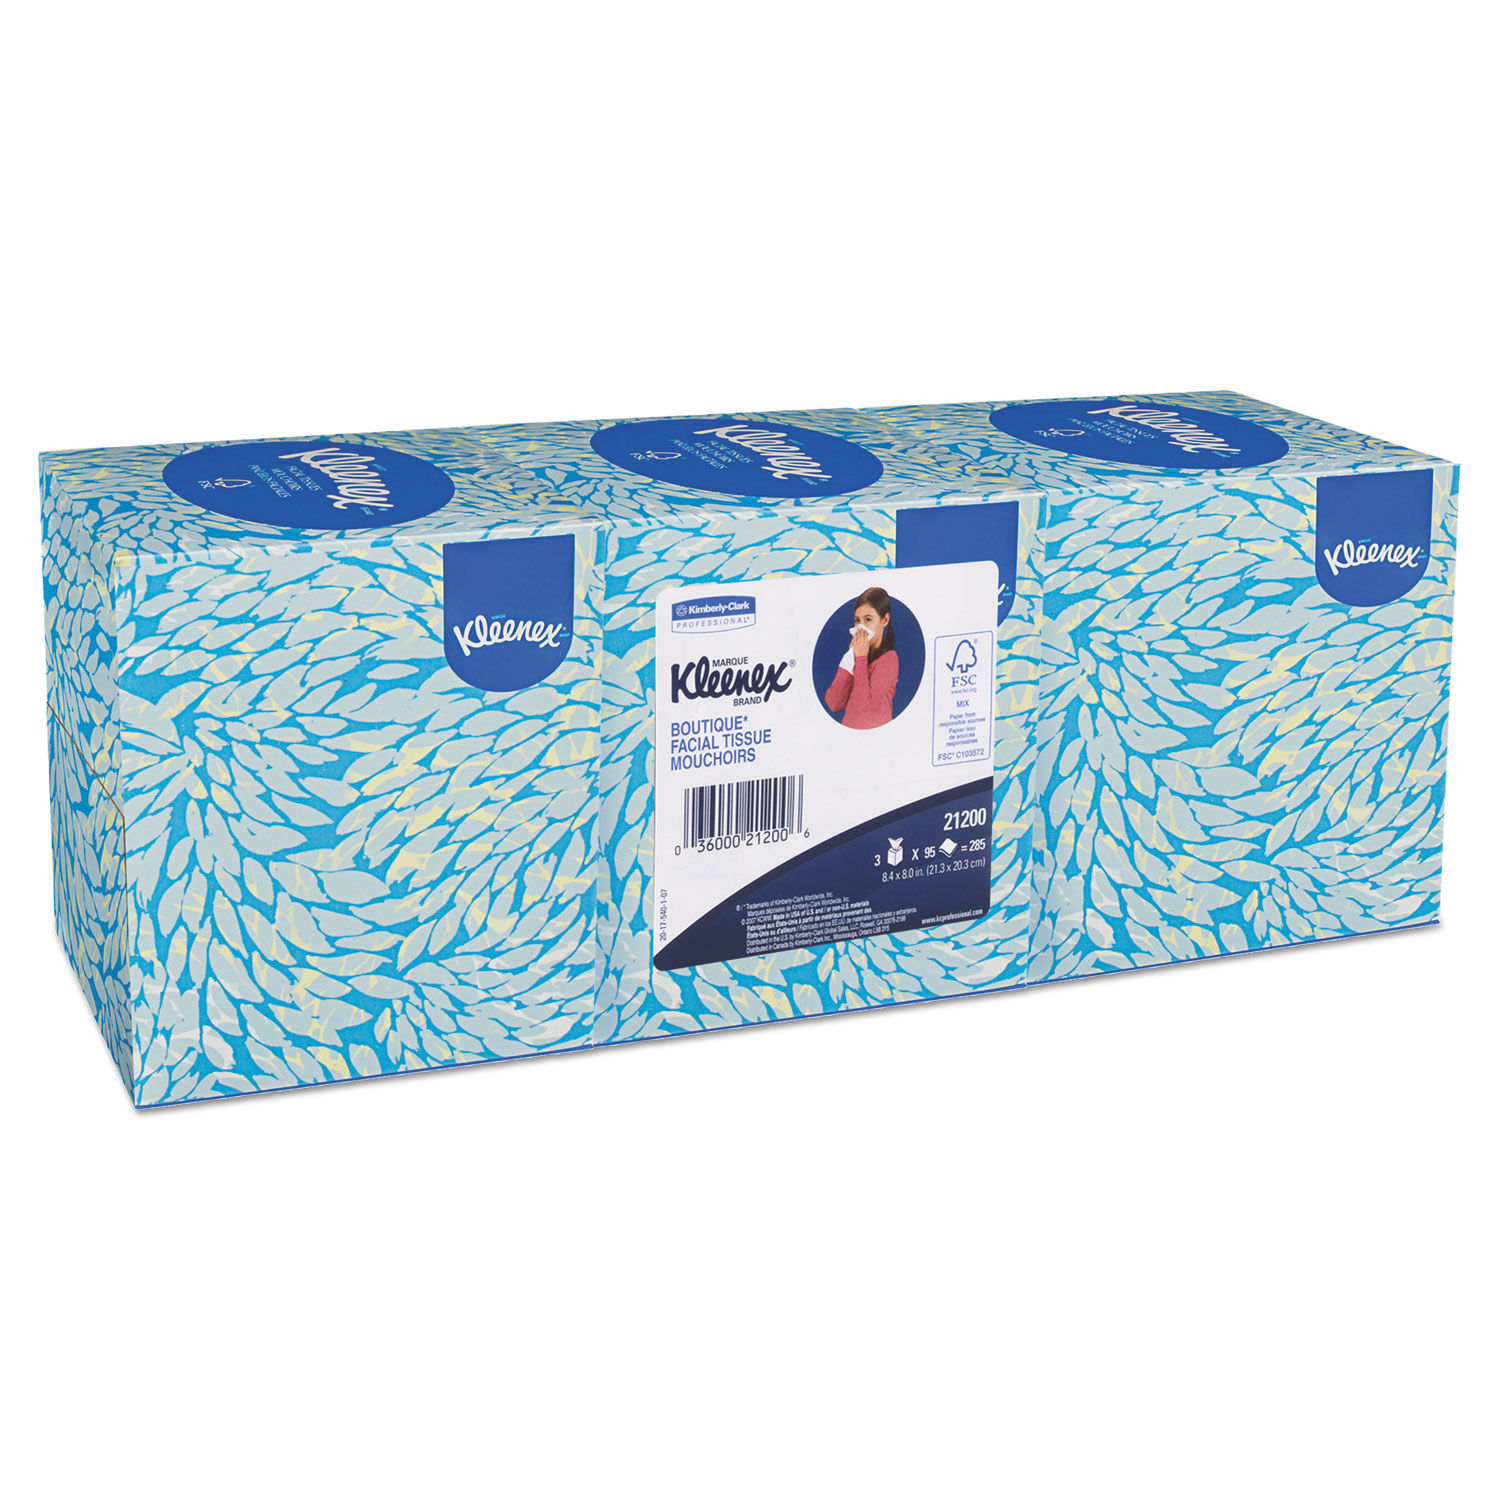 Facial Tissue, 2-Ply, Pop-Up Box, 3 Boxes/Pack, 12 Packs/Carton